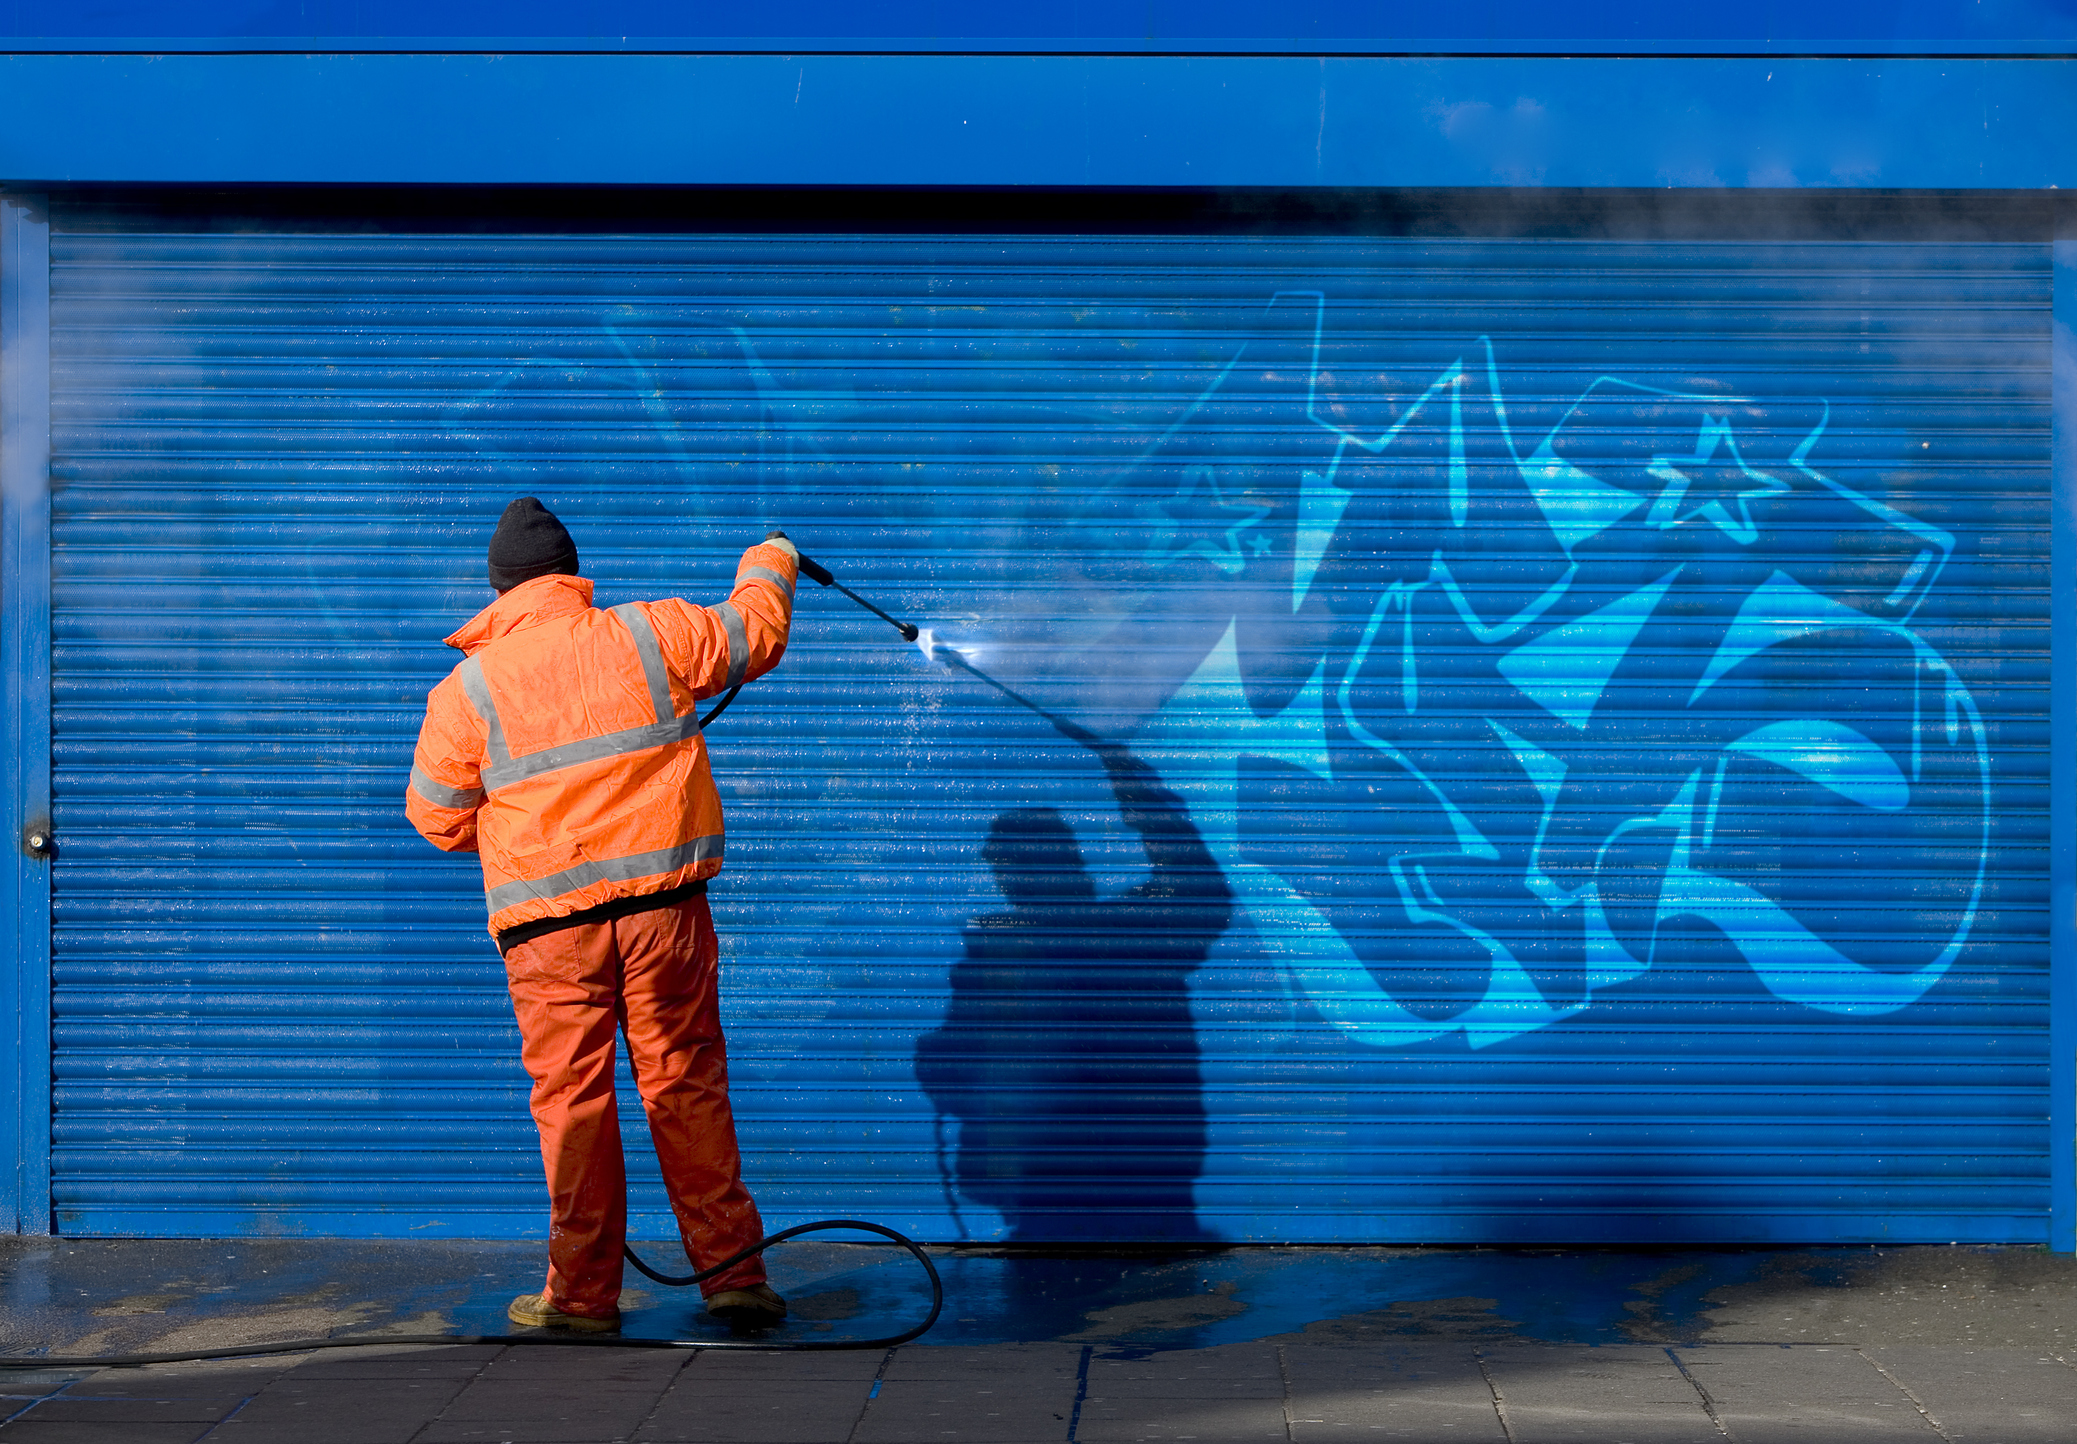 Painting over graffiti 